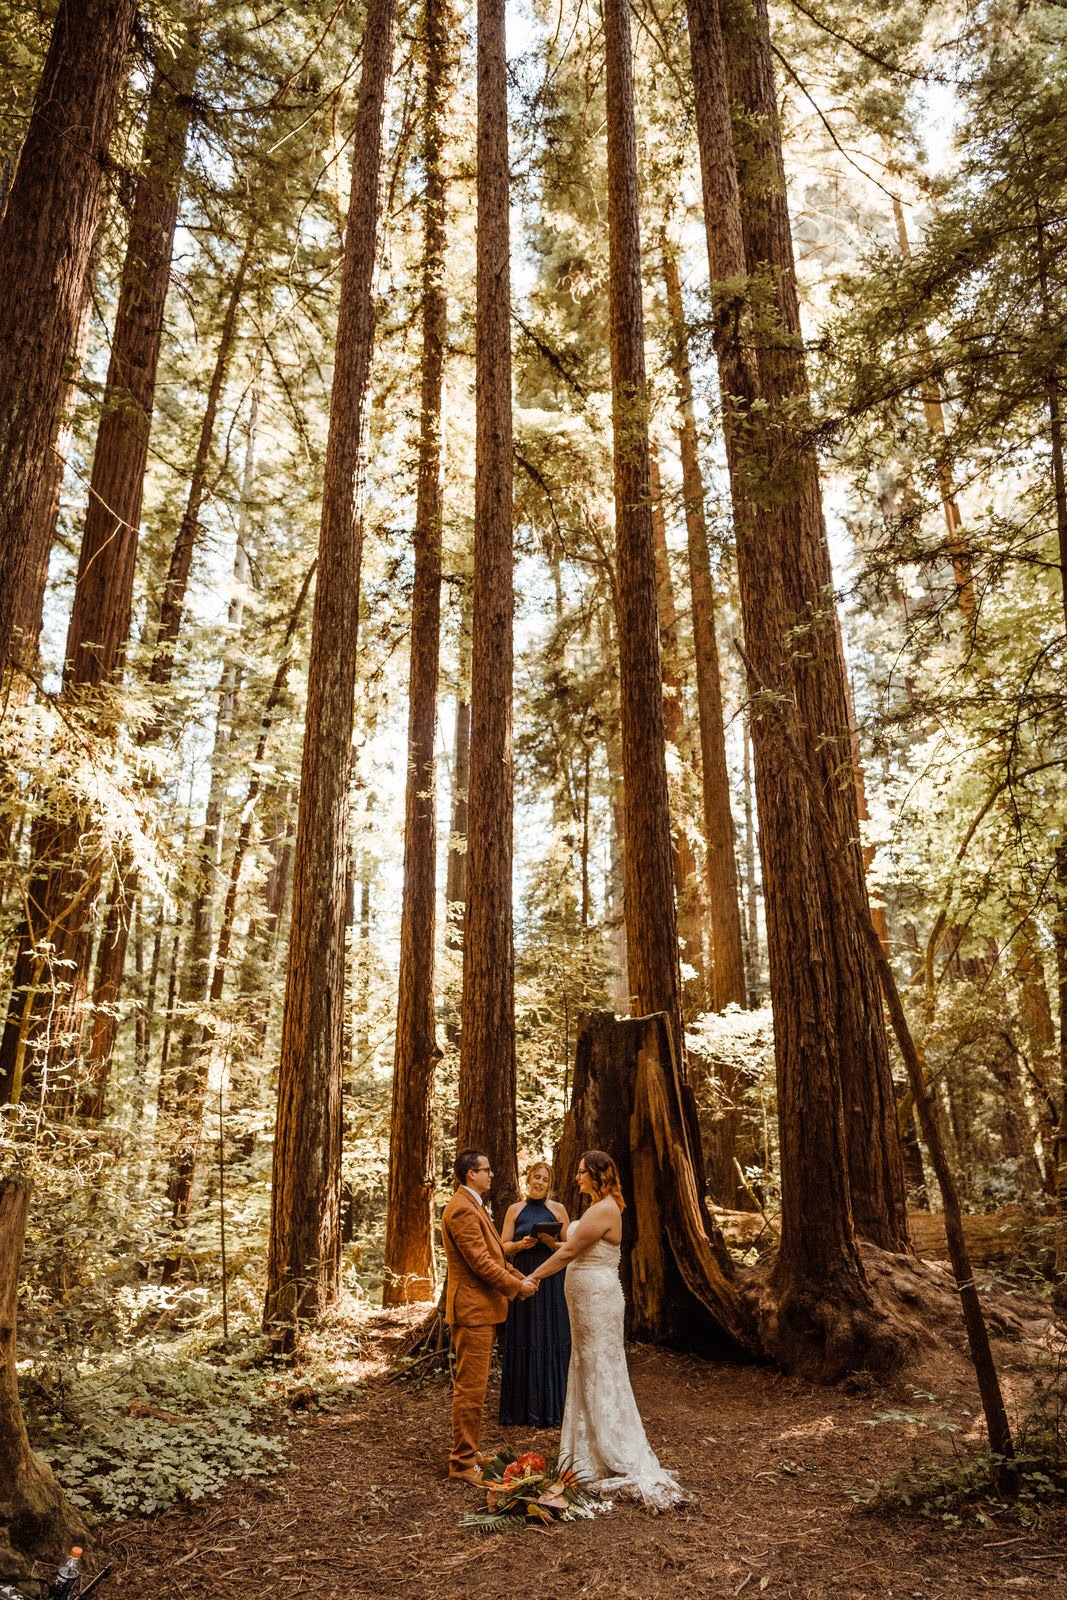 Intimate Santa Cruz Redwoods Elopement Ceremony - Photo by Kept Record